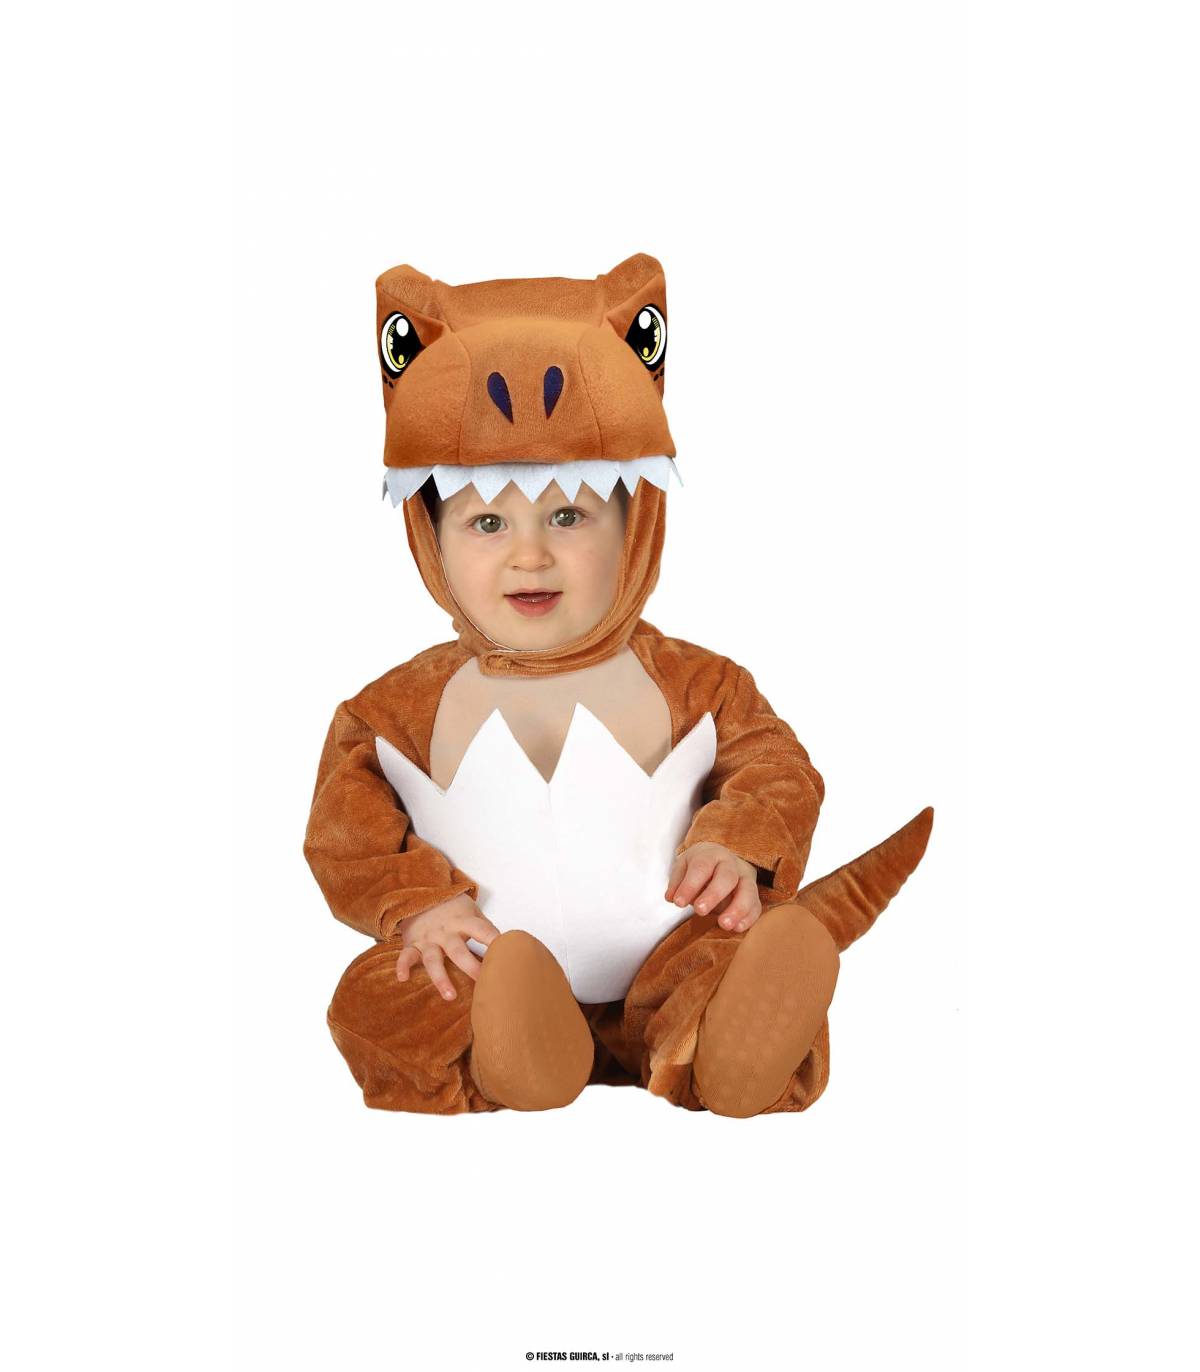 Disfraz dinosaurio infantil 